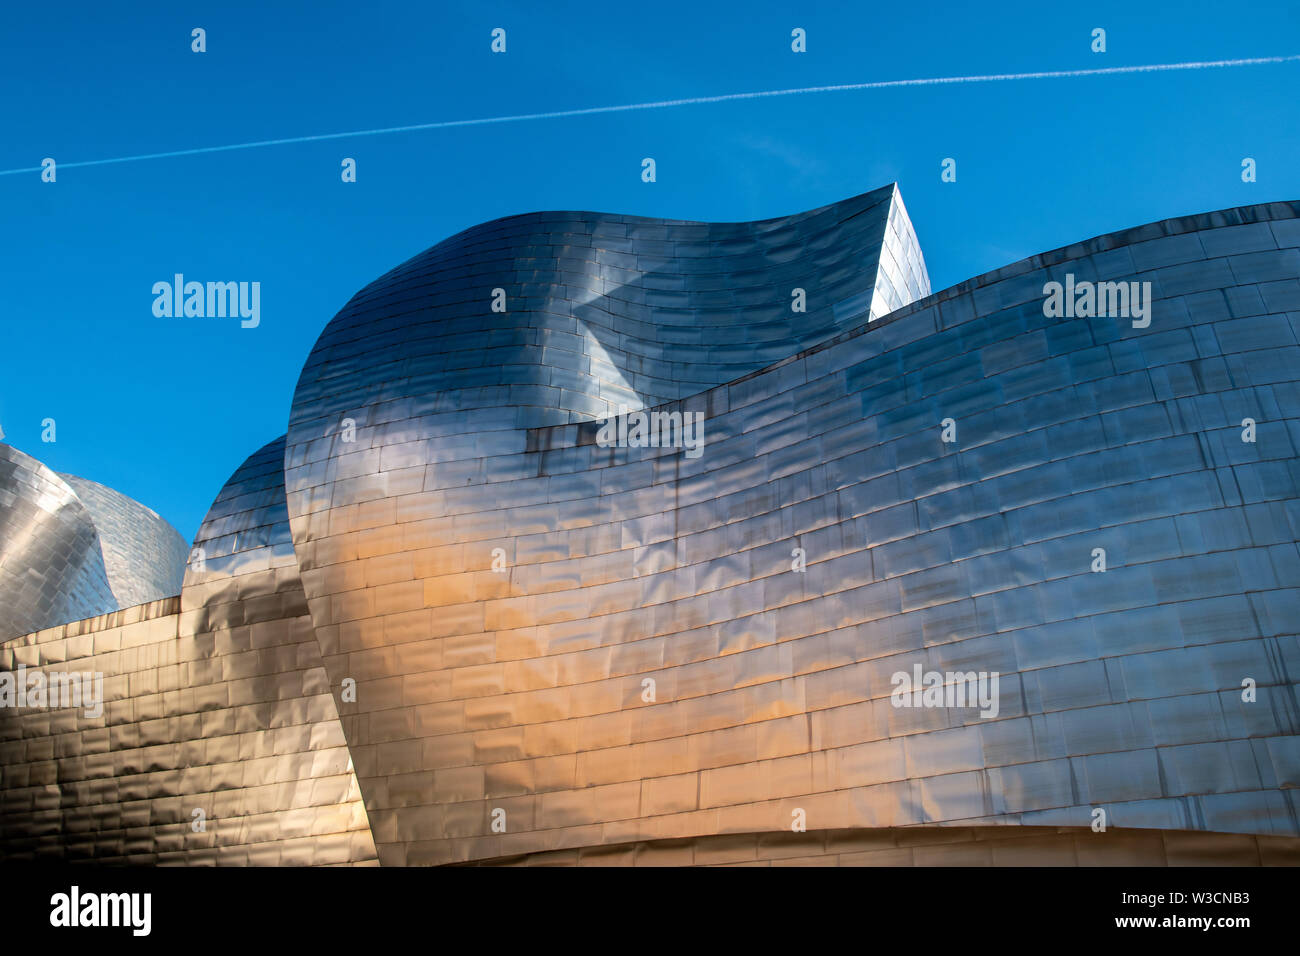 The exterior metal skinned Guggenheim Museum of Bilbao, Spain Stock Photo